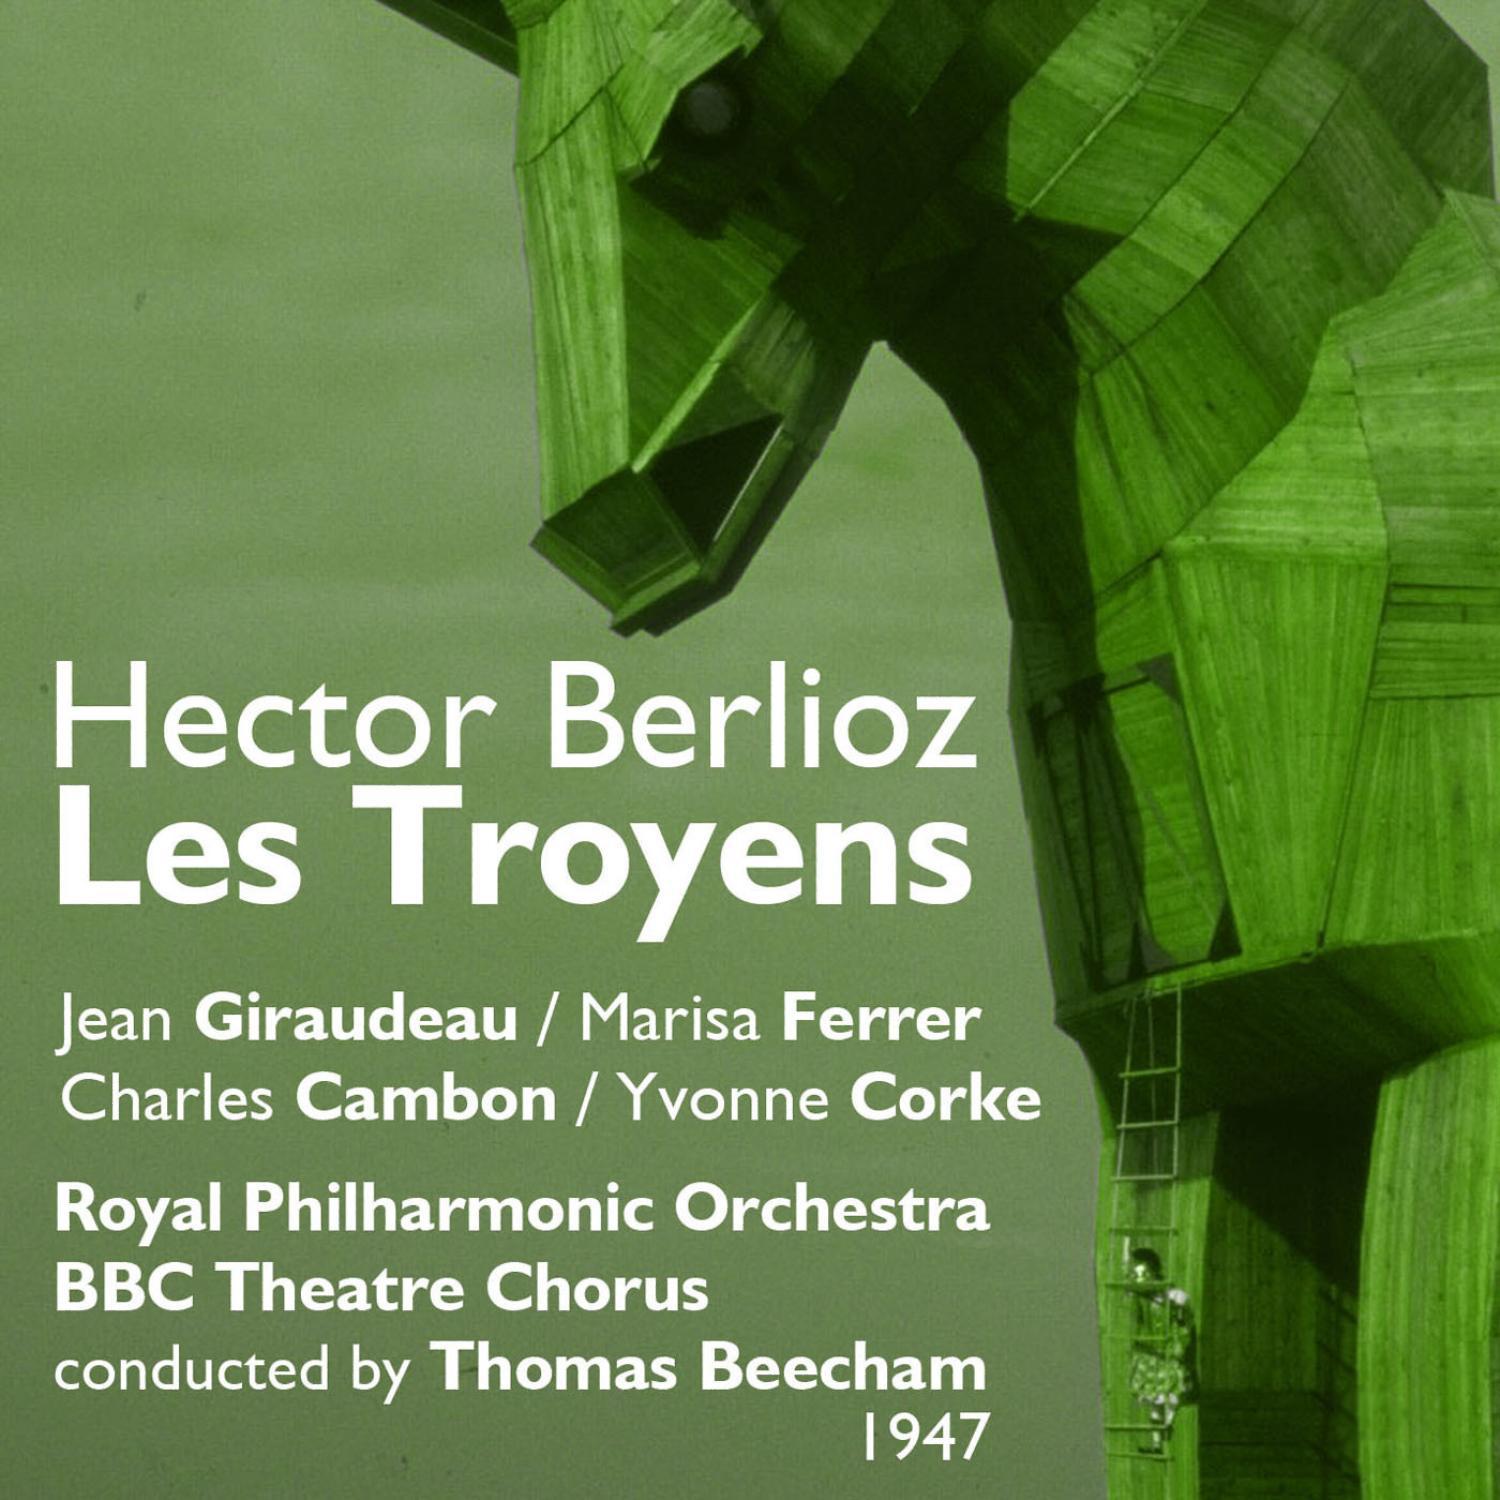 Jean Giraudeau - Hector Berlioz: Les Troyens - Act II, 